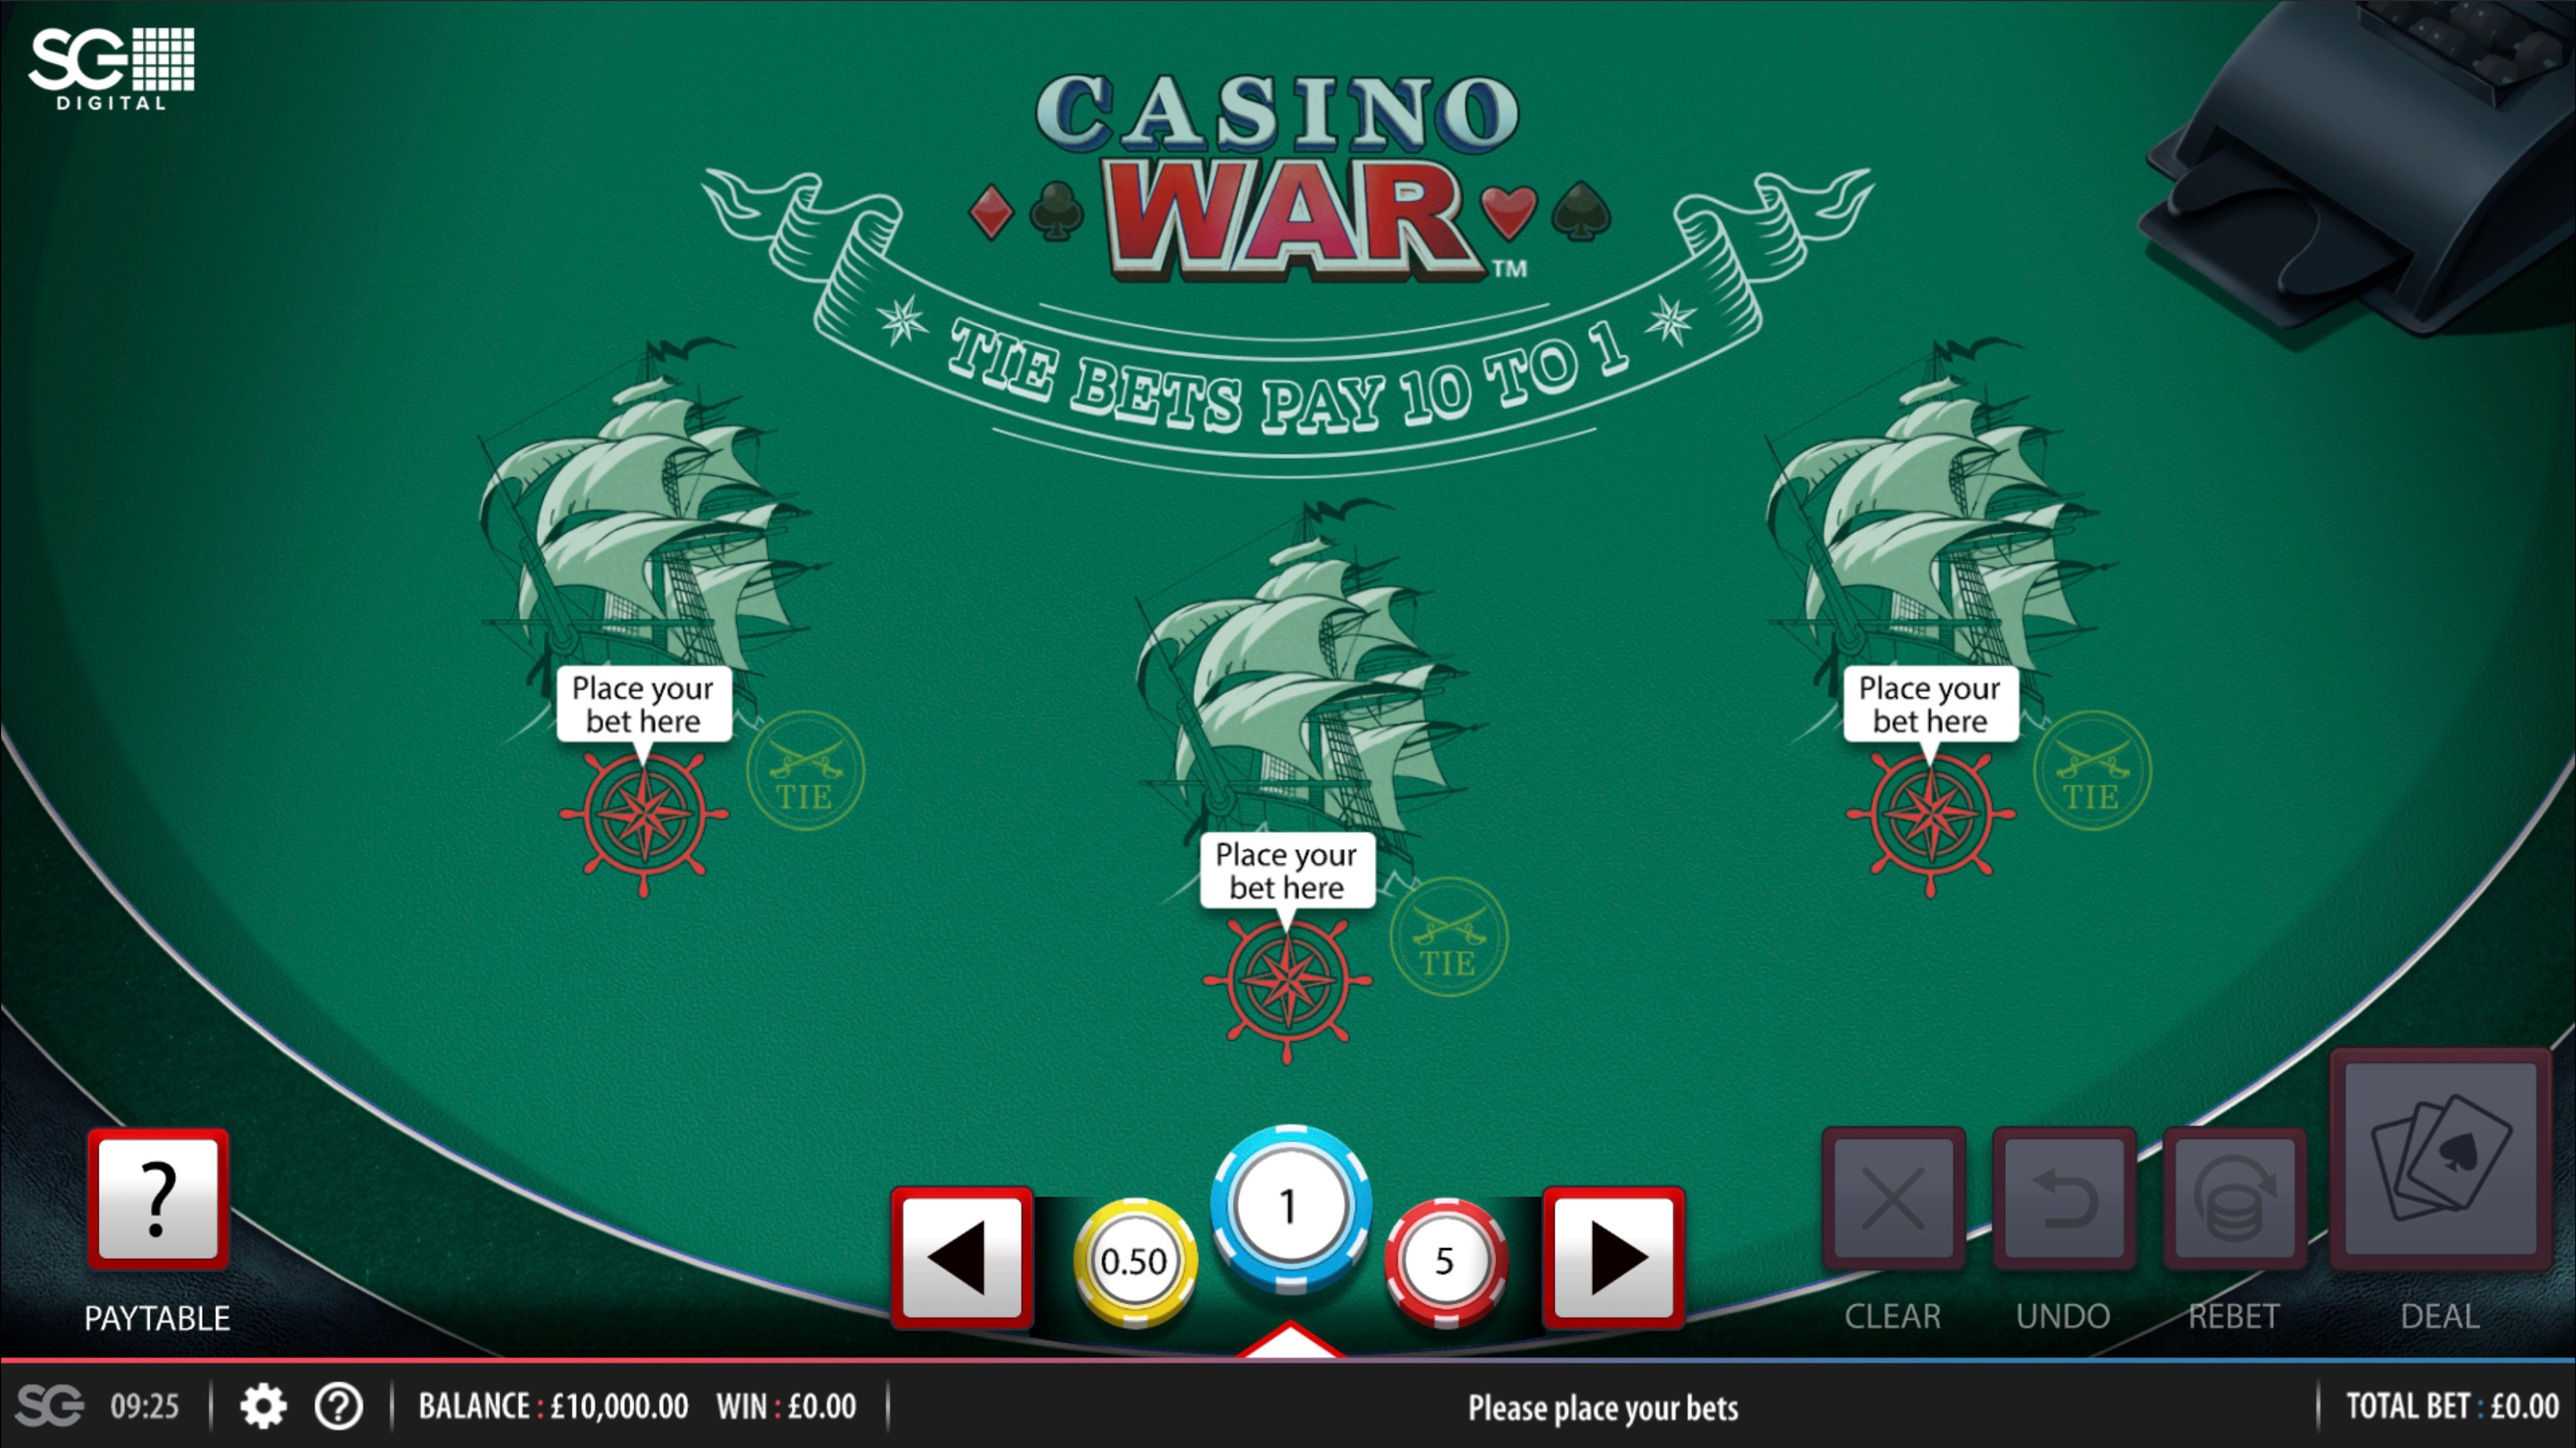 paly casino war online free